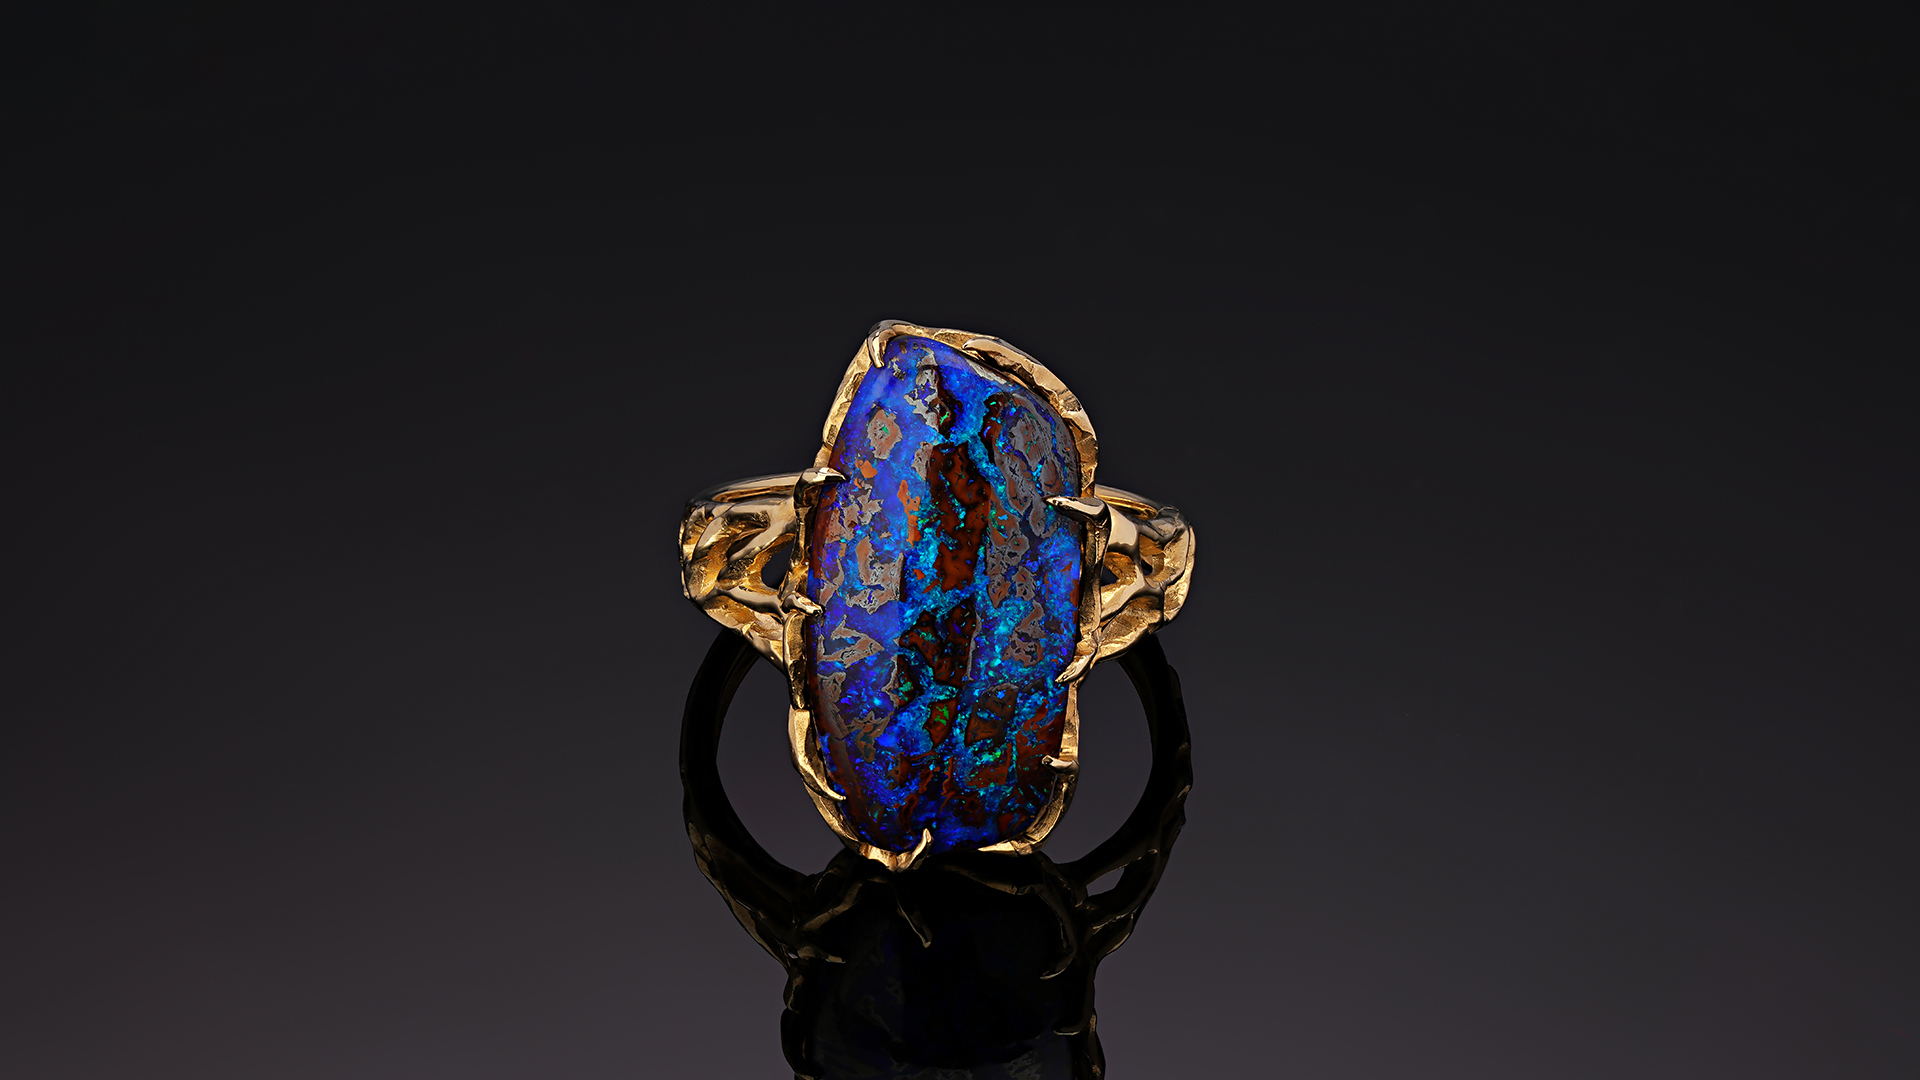 vrubel collection boulder opal ring yellow gold alexey gabilo